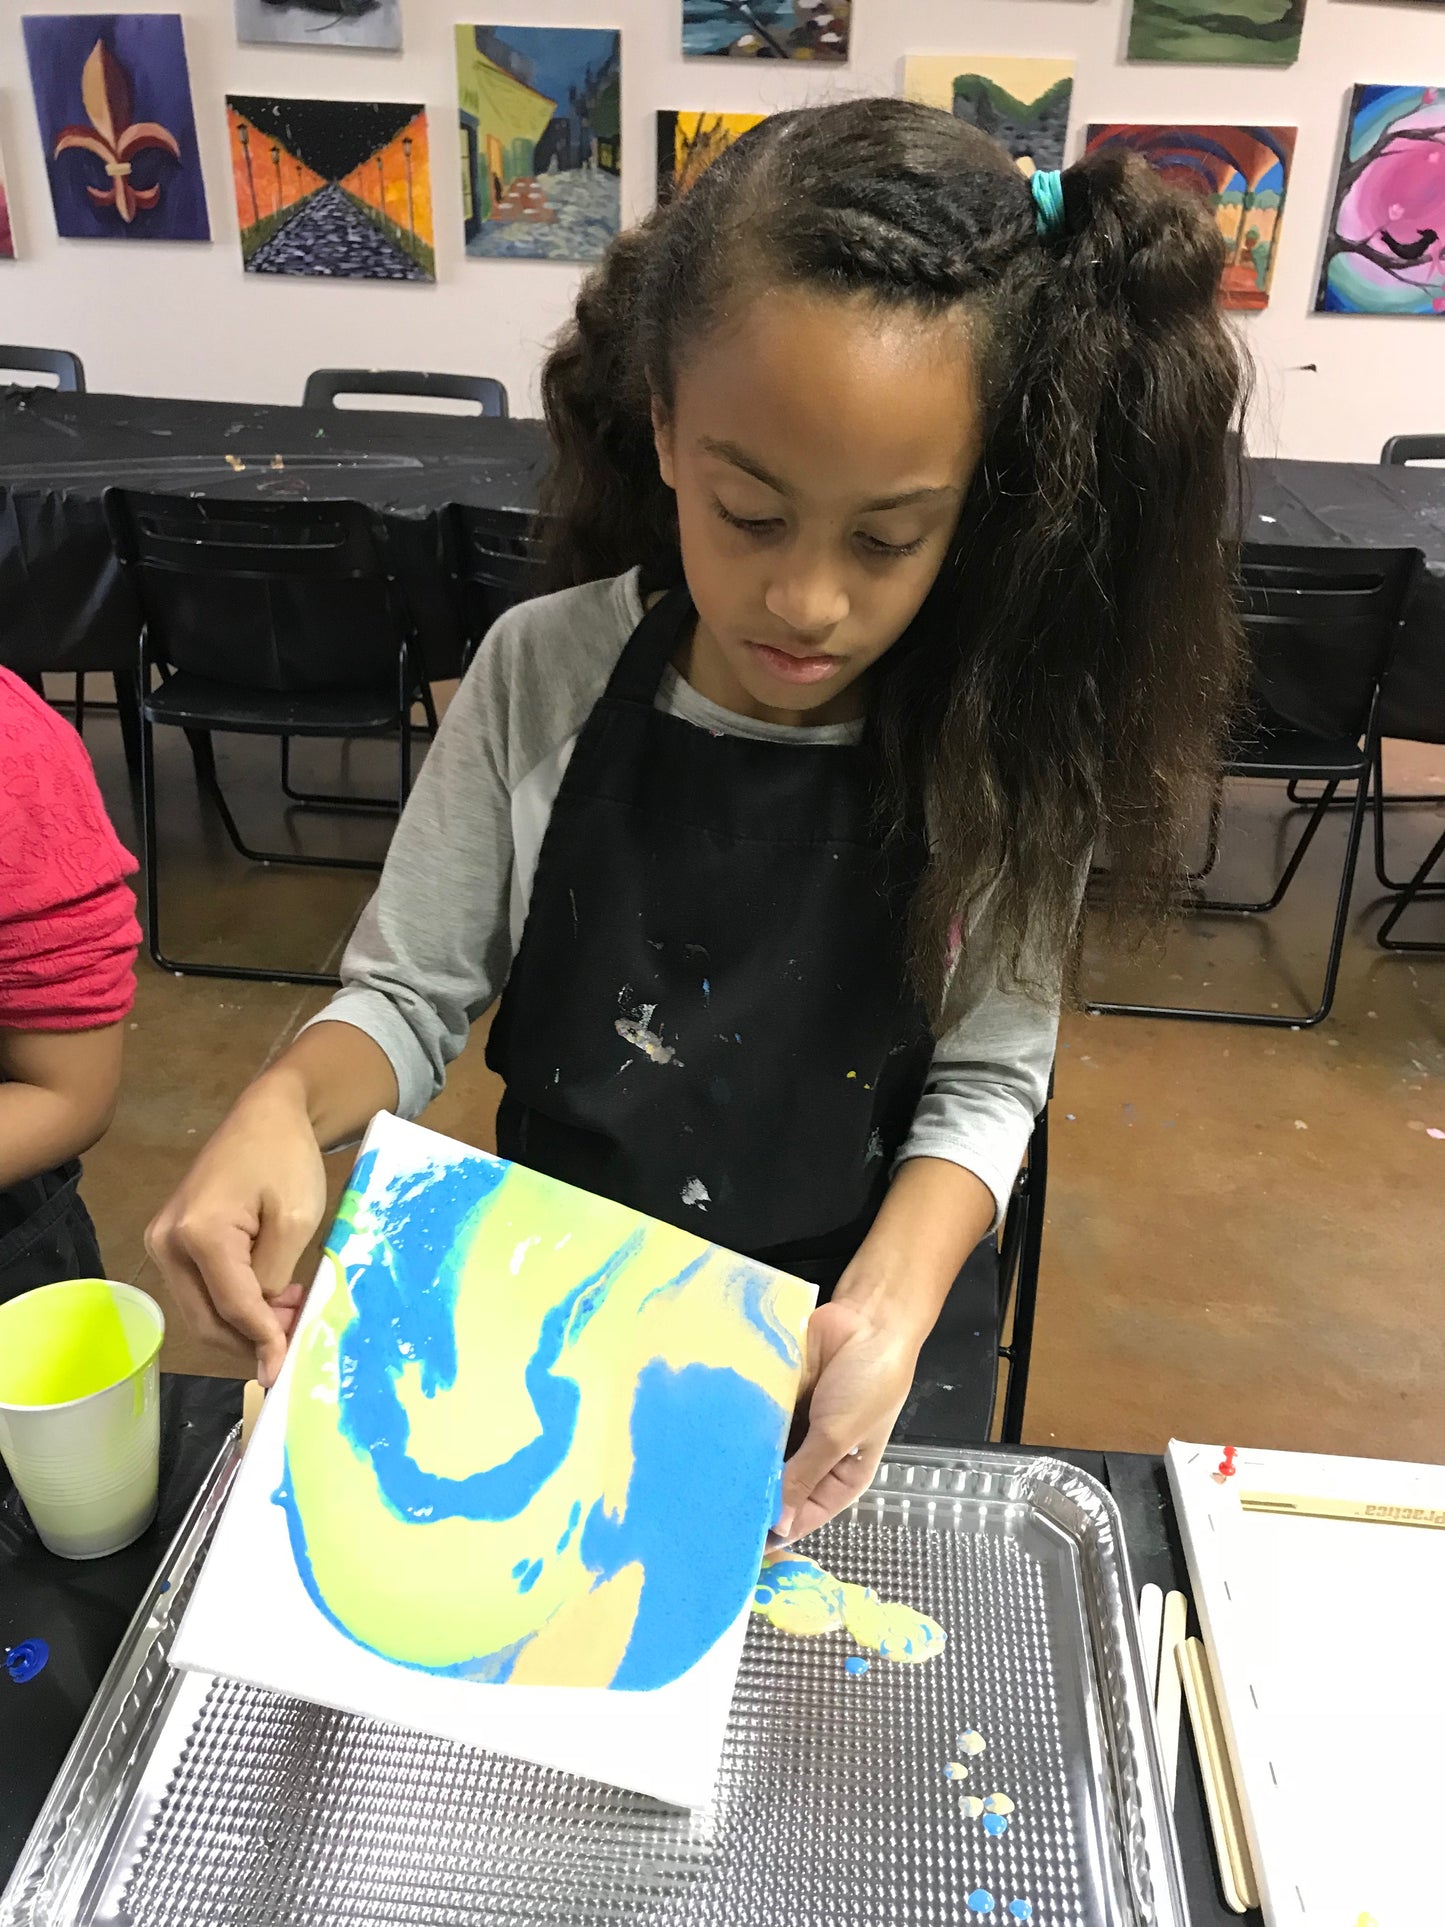 Wed, Nov 16th, 4-6P “Kids Paint: After the Pour” Houston Public Kids Painting Class